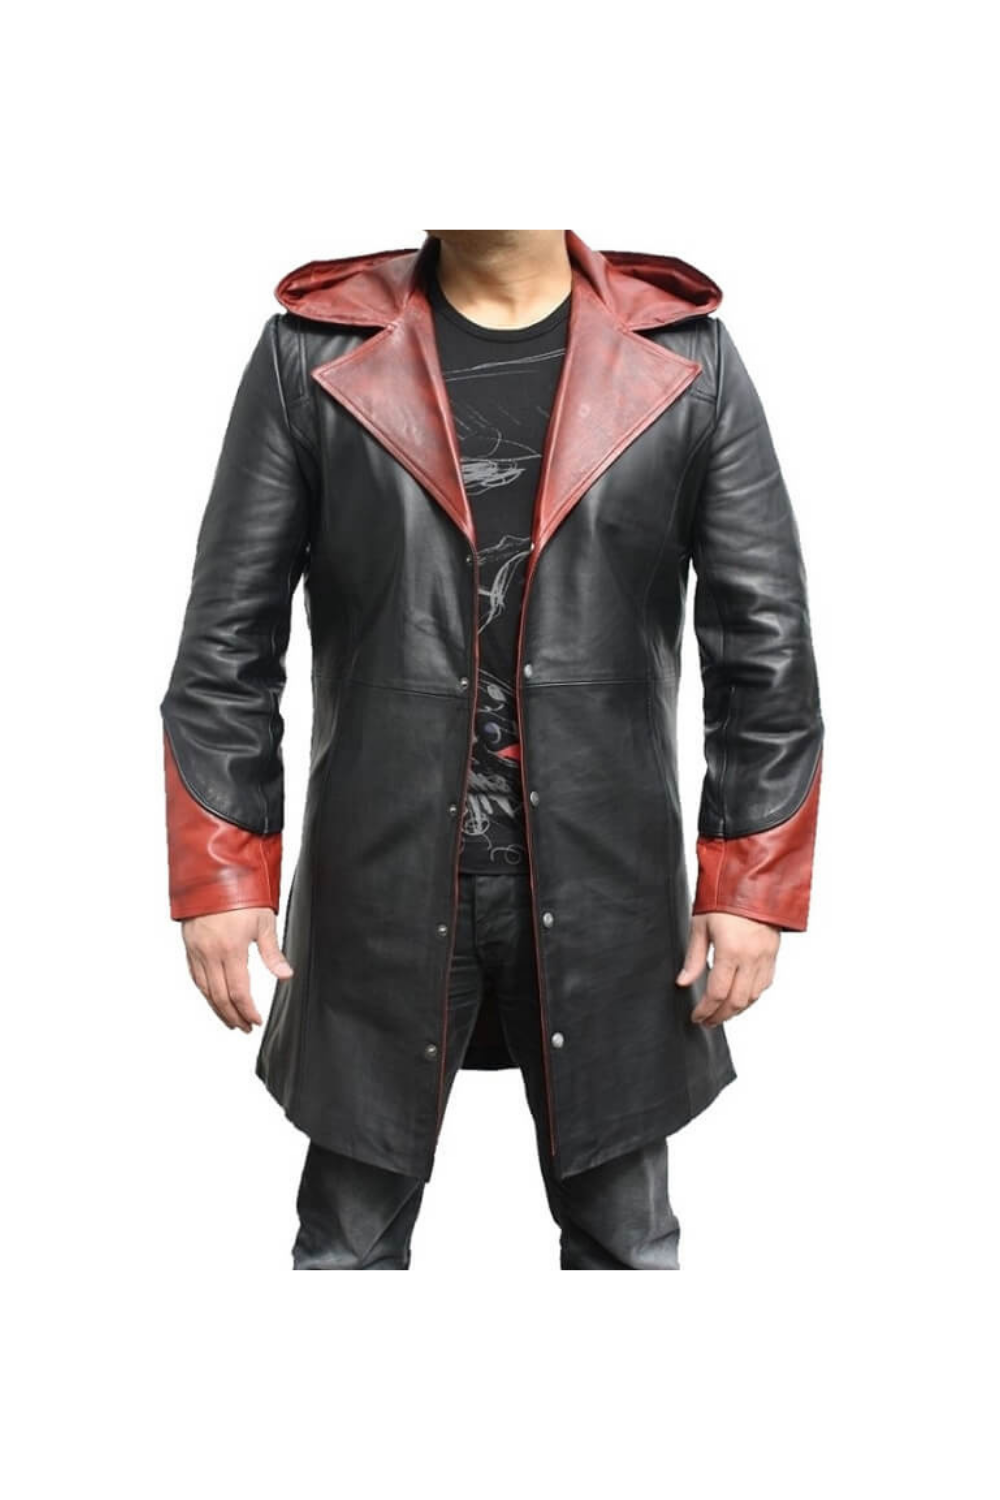 DMC 5 Dante Trench Coat | Dante Jacket Devil May Cry 5